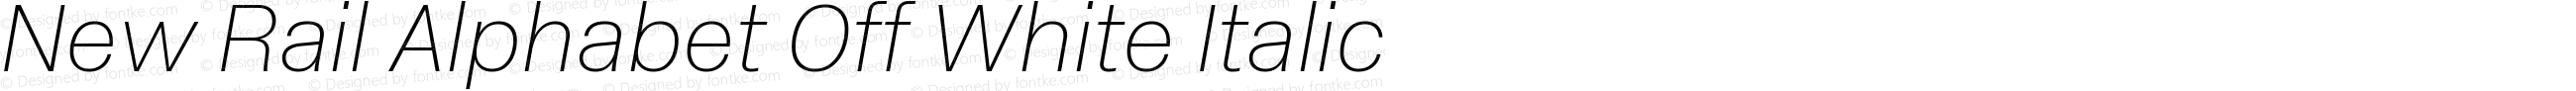 New Rail Alphabet Off White Italic